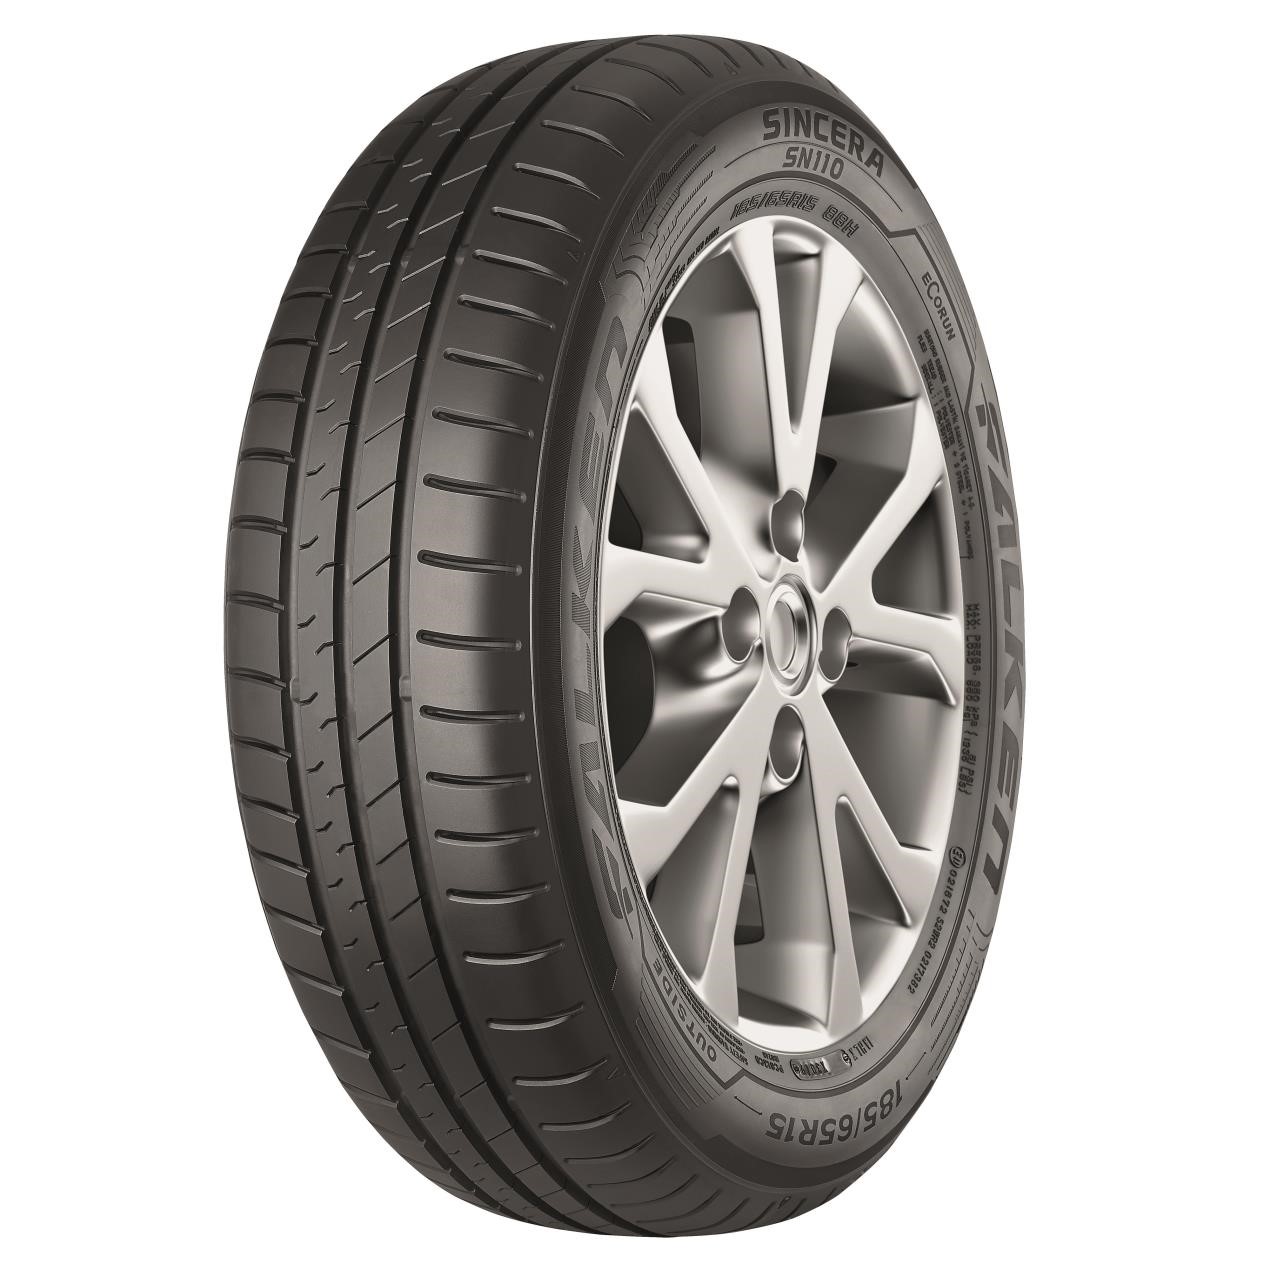 Falken Sincera SN110 Ecorun Tyre Tests and Reviews Tyre Reviews